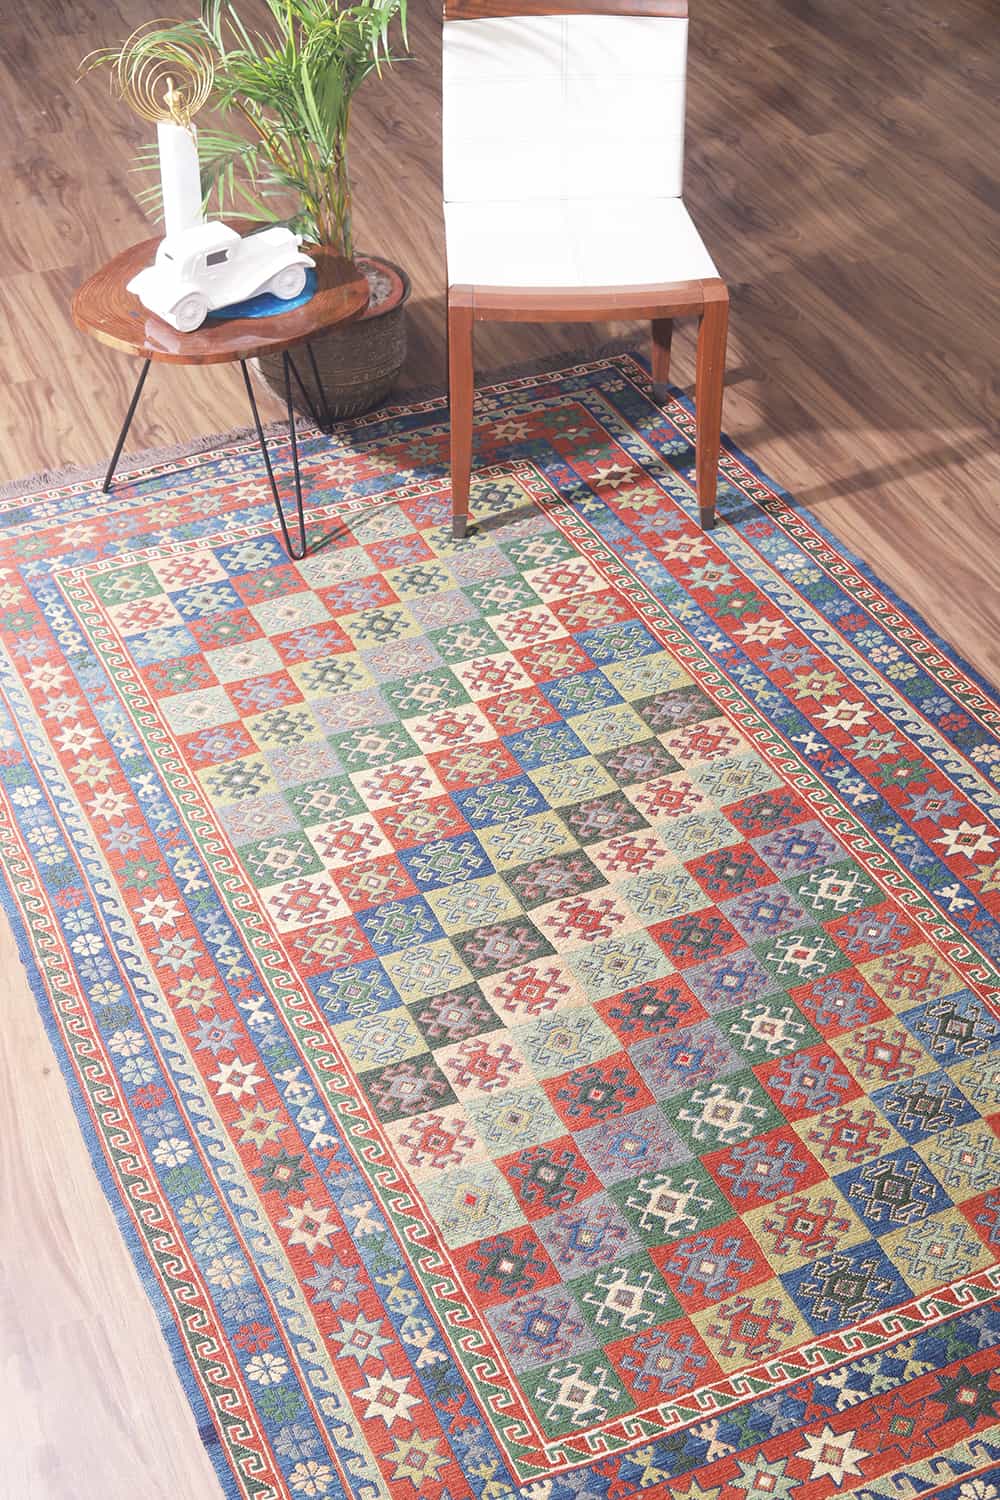 Red and blue modern carpet design by Carpet Cellar